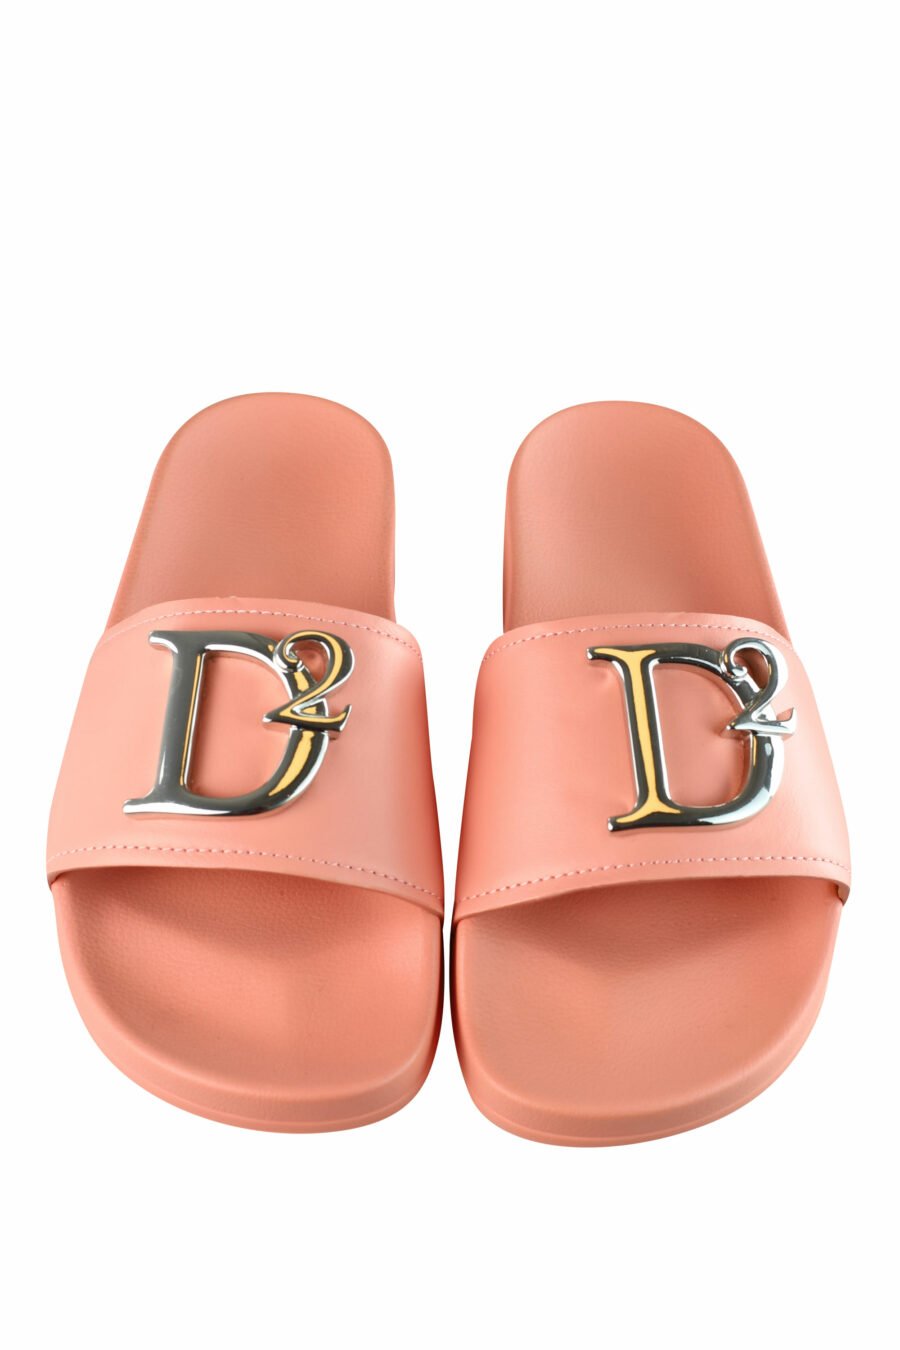 Pink flip flops with metal "D2" logo - IMG 1293